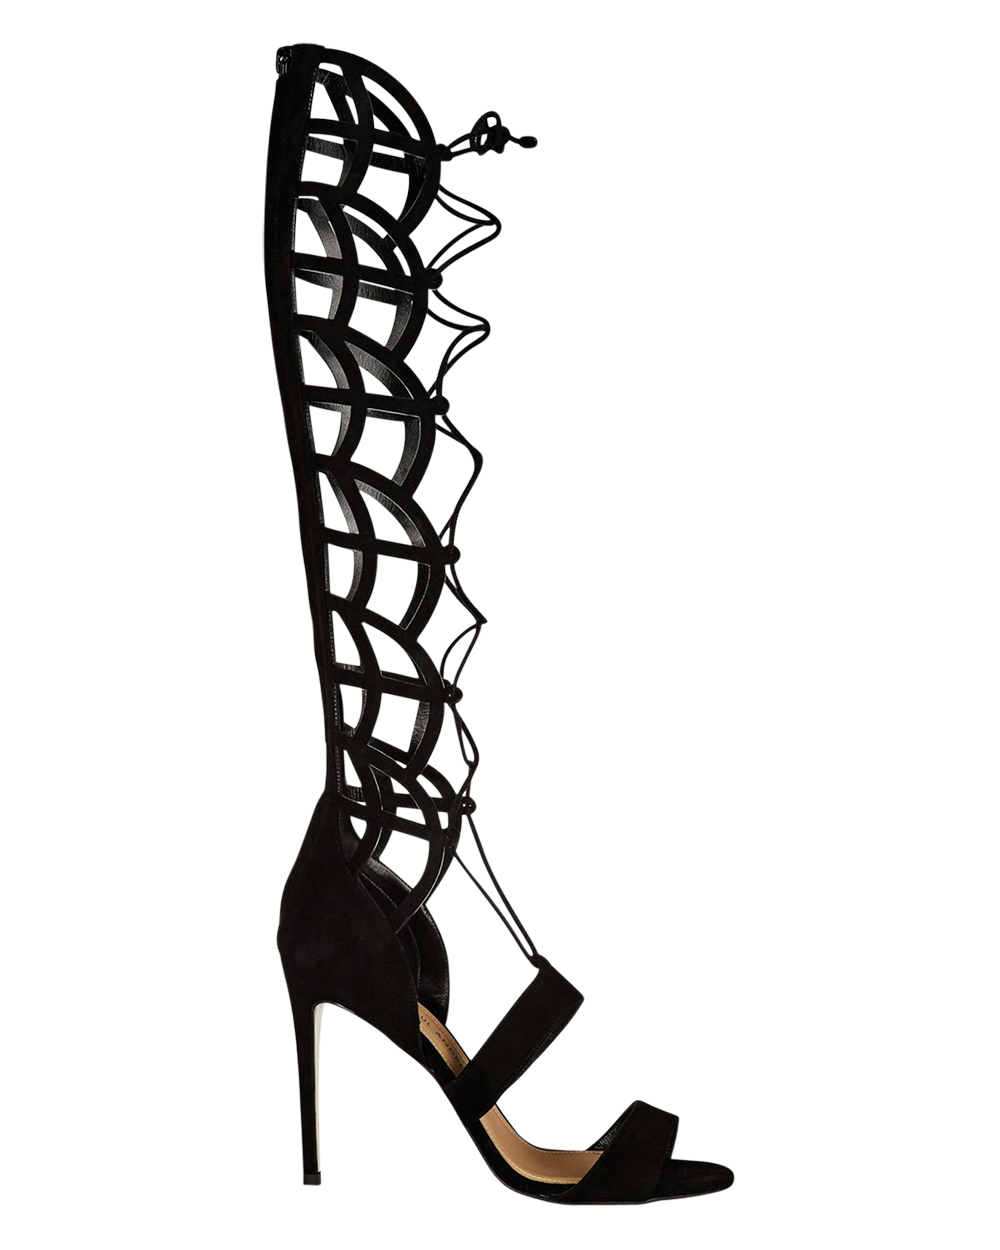 Paul Andrew heels, $2378, from Net-a-Porter